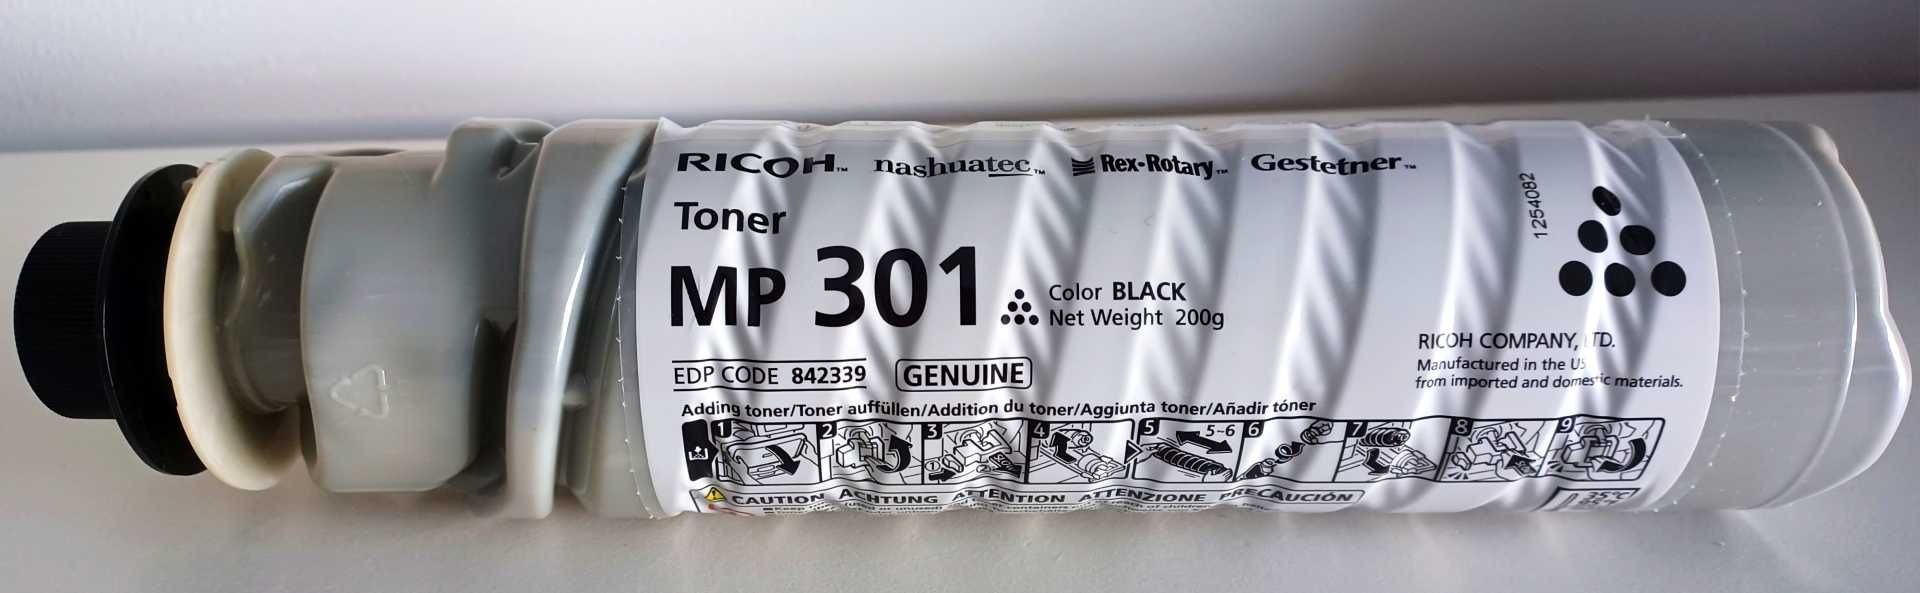 Toner Ricoh MP 301 Original